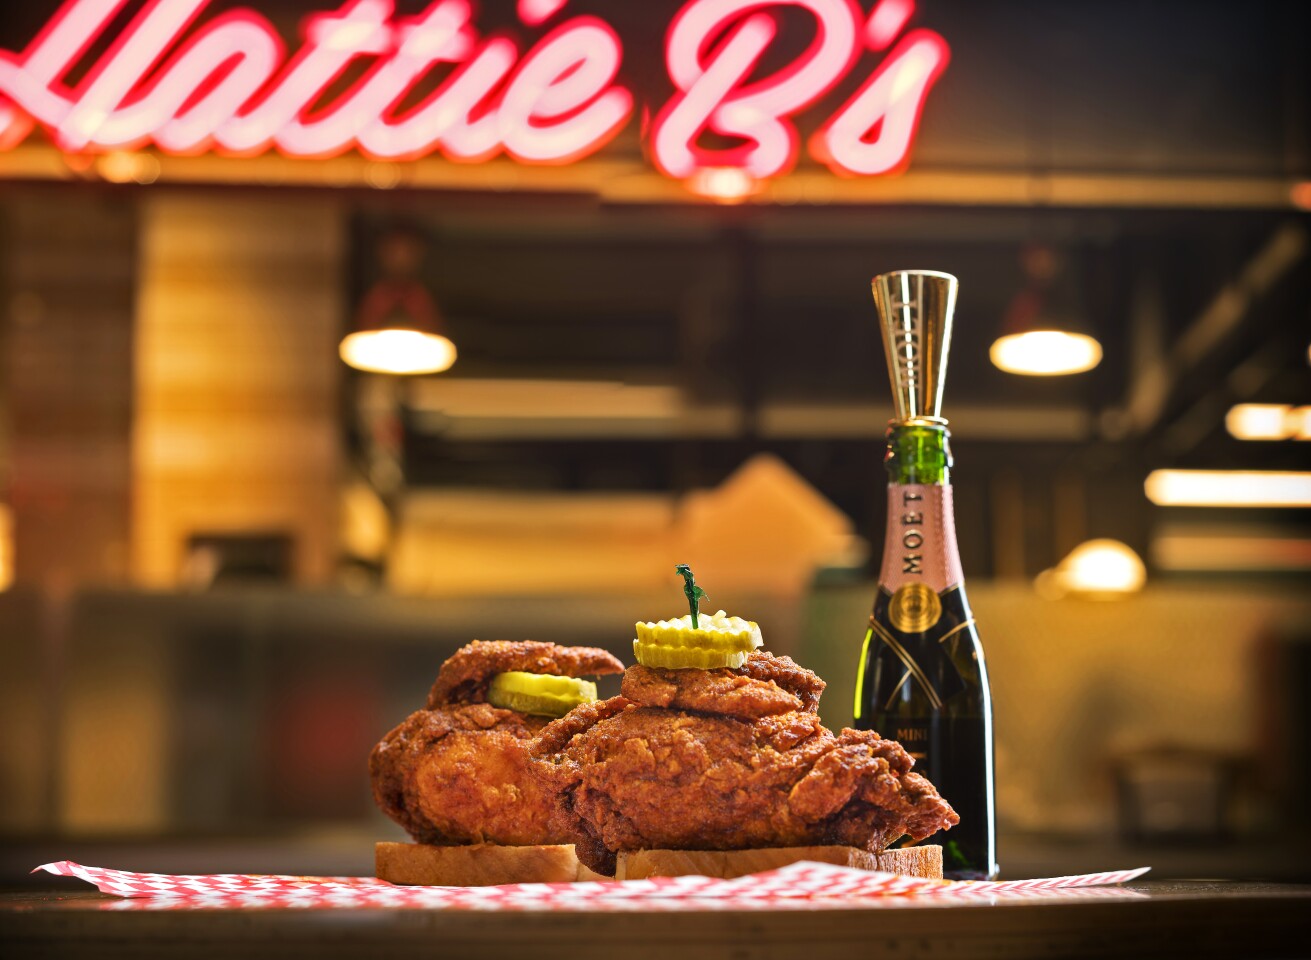 Hattie B's Hot Chicken & Champagne at the Block 16 inside The Cosmopolitan of Las Vegas